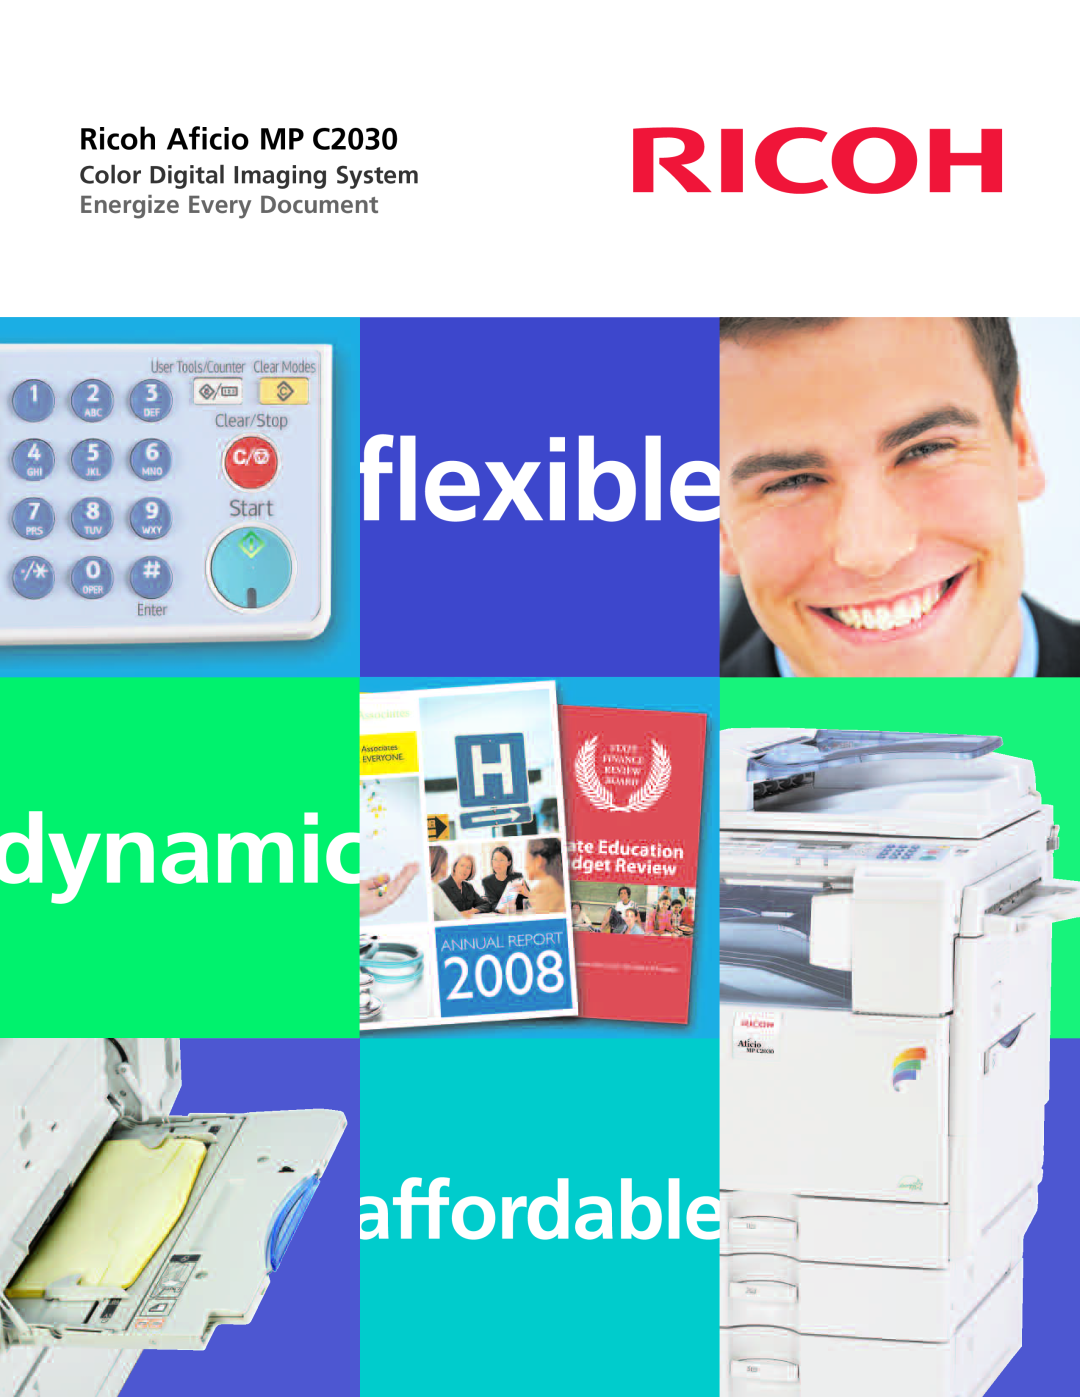 Ricoh manual flexible, dynamic, affordable, Ricoh Aficio MP C2030, Color Digital Imaging System 